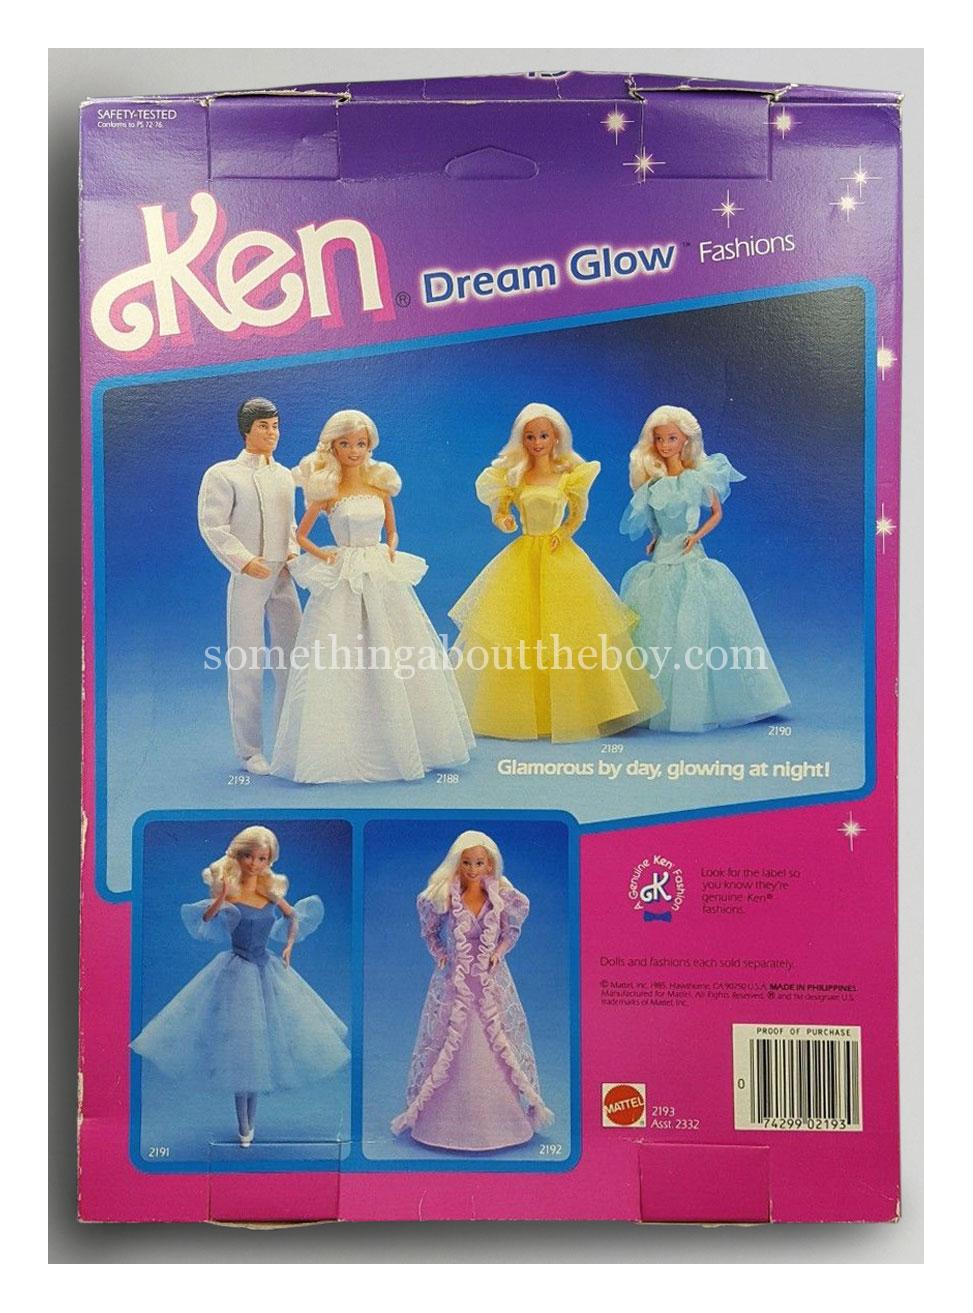 1986 Dream Glow Fashions #2193 original packaging